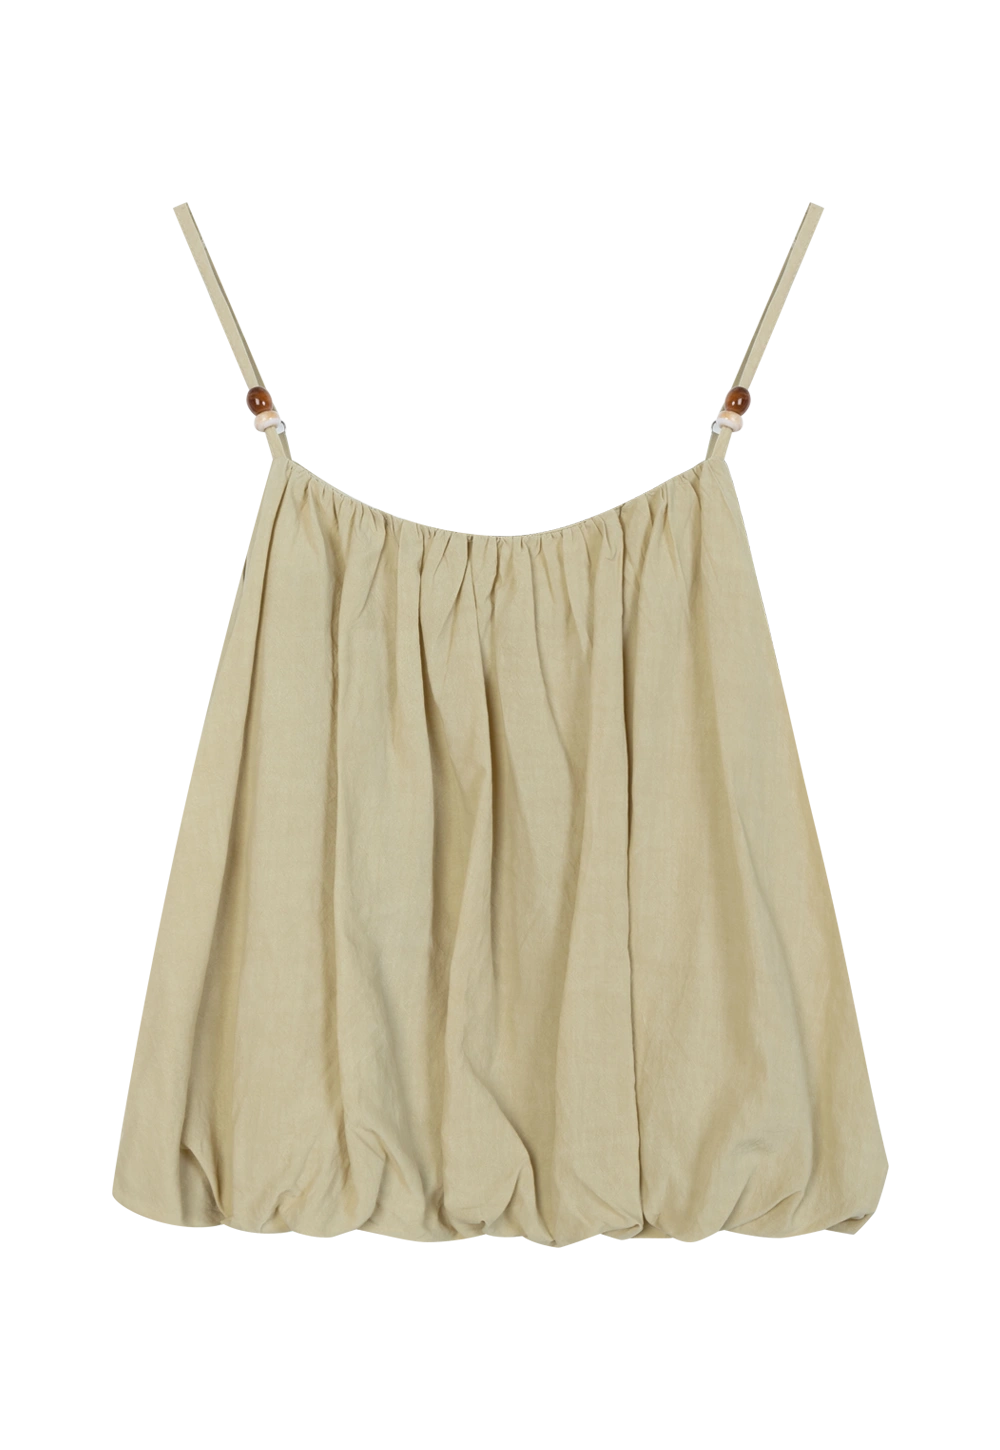 Chic Linen Women's Camisole Top with Decorative Button Details